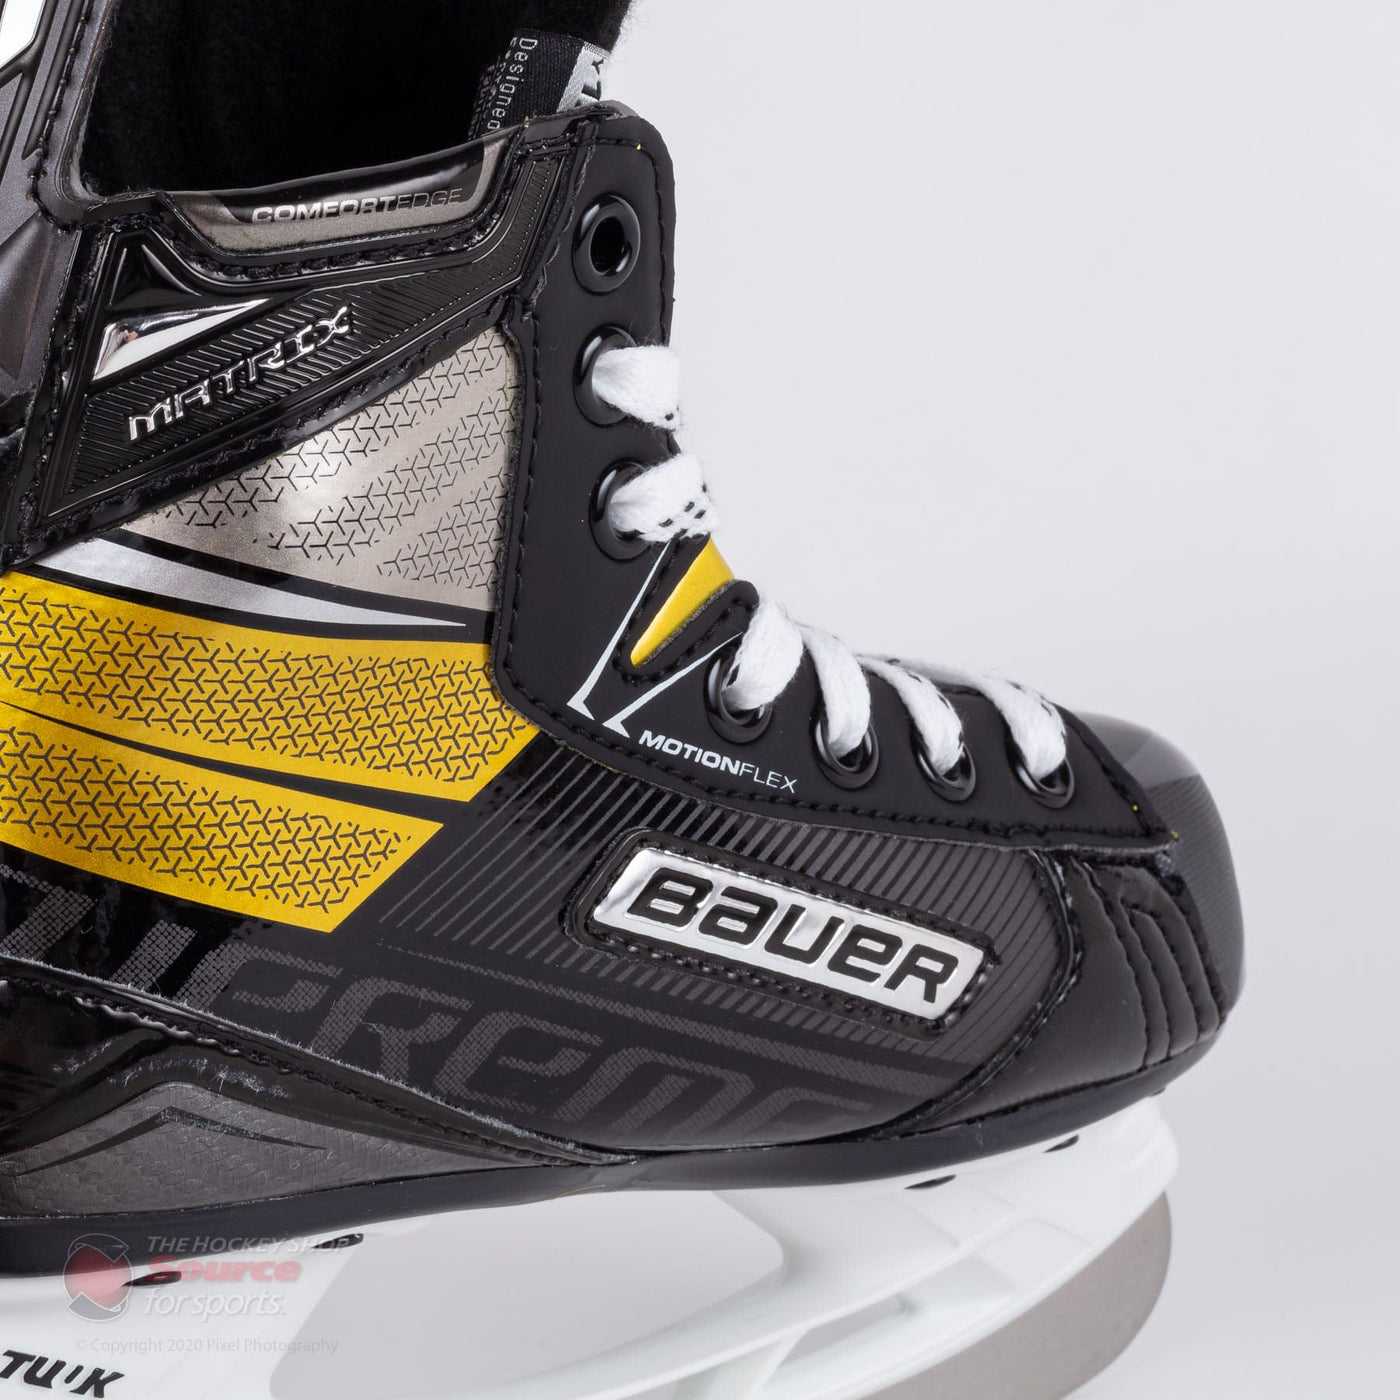 Bauer Supreme Matrix Youth Hockey Skates (2020)